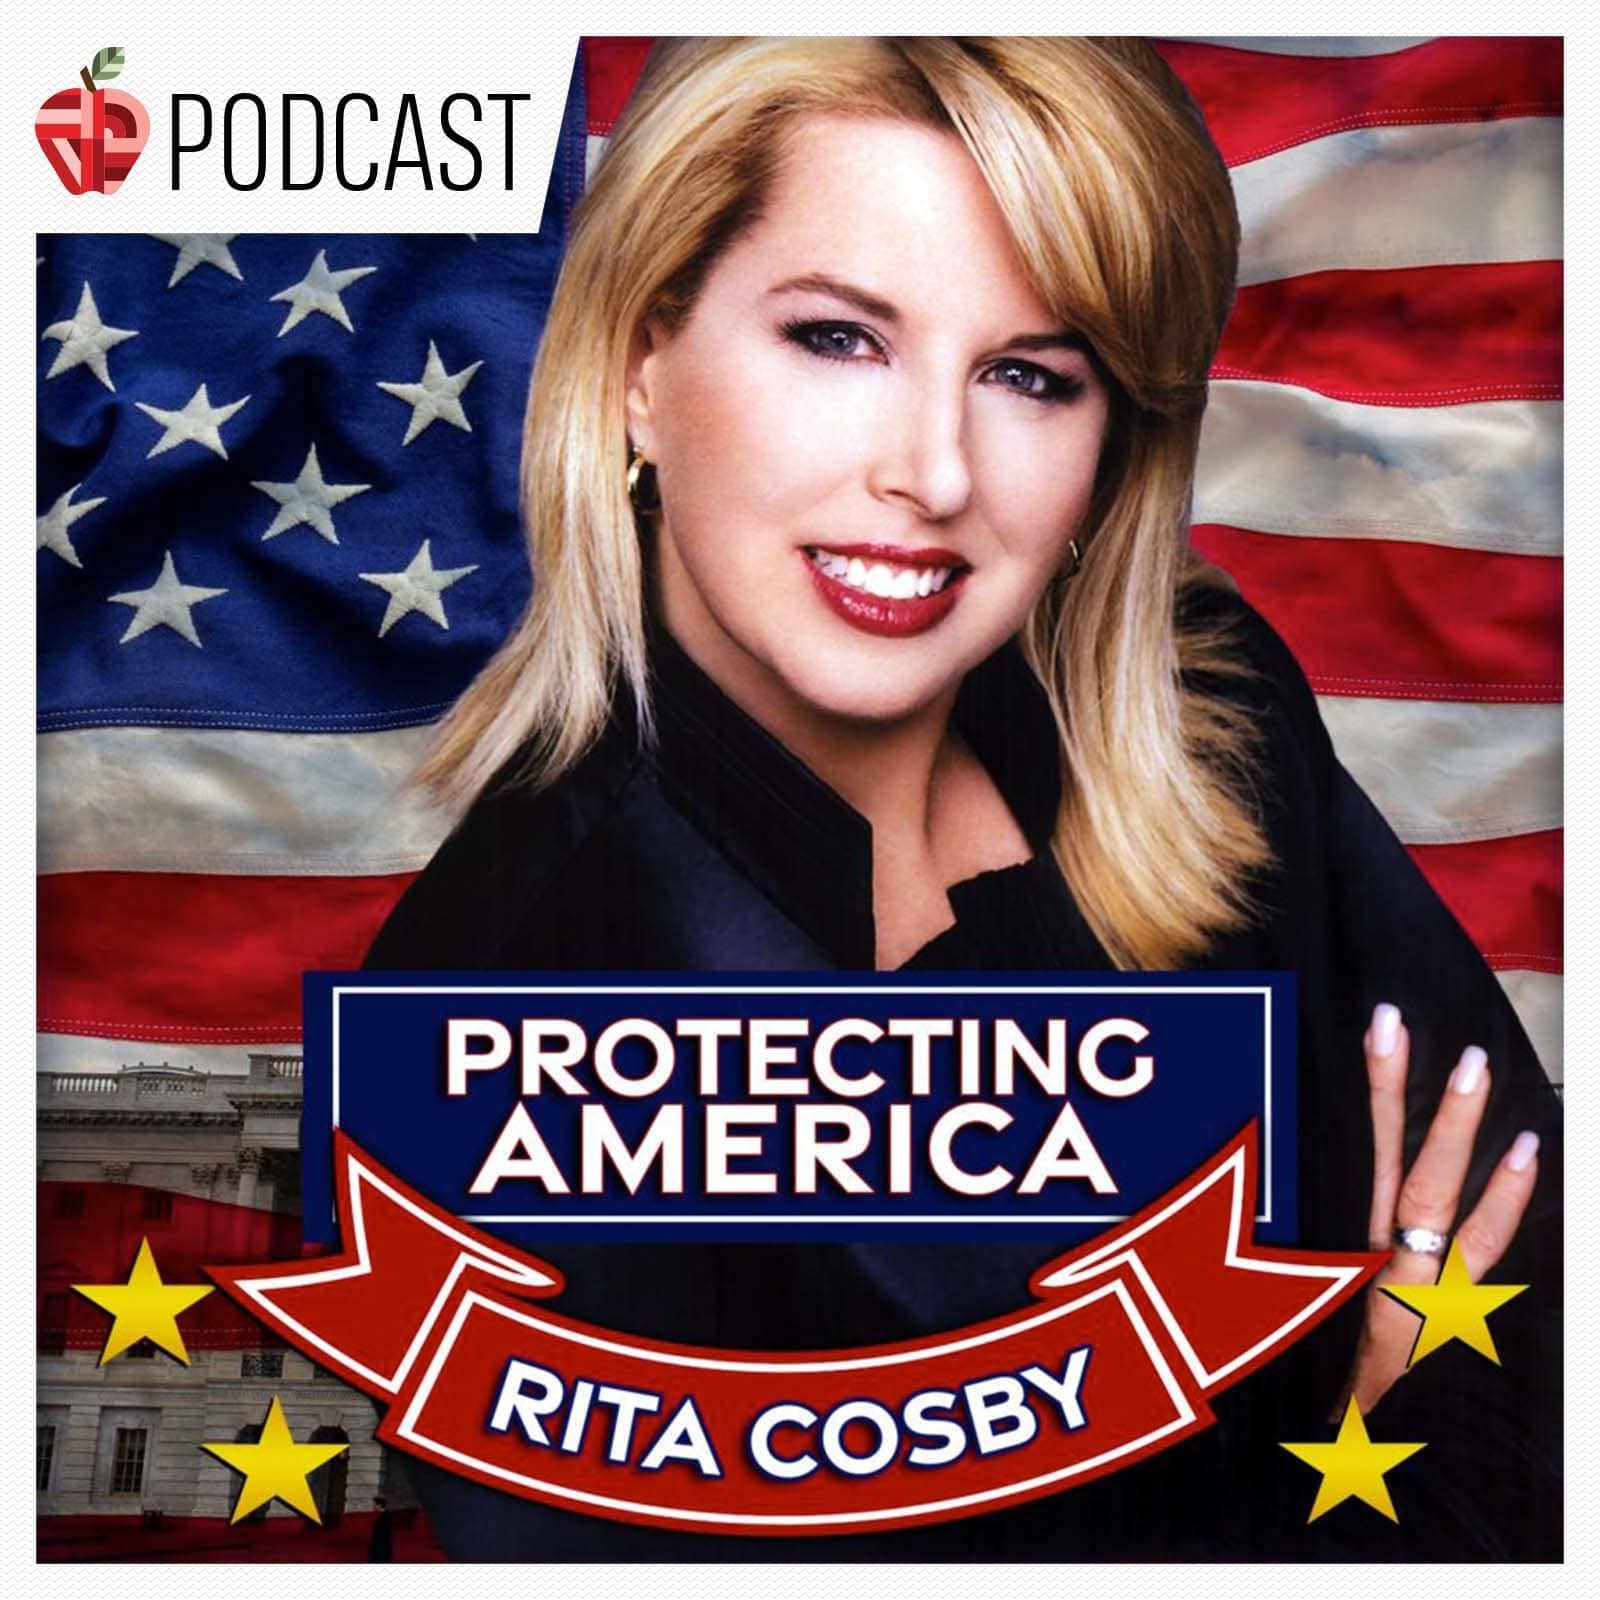 rita-cosby-protecting-america-correct-podcast-new-logo533663